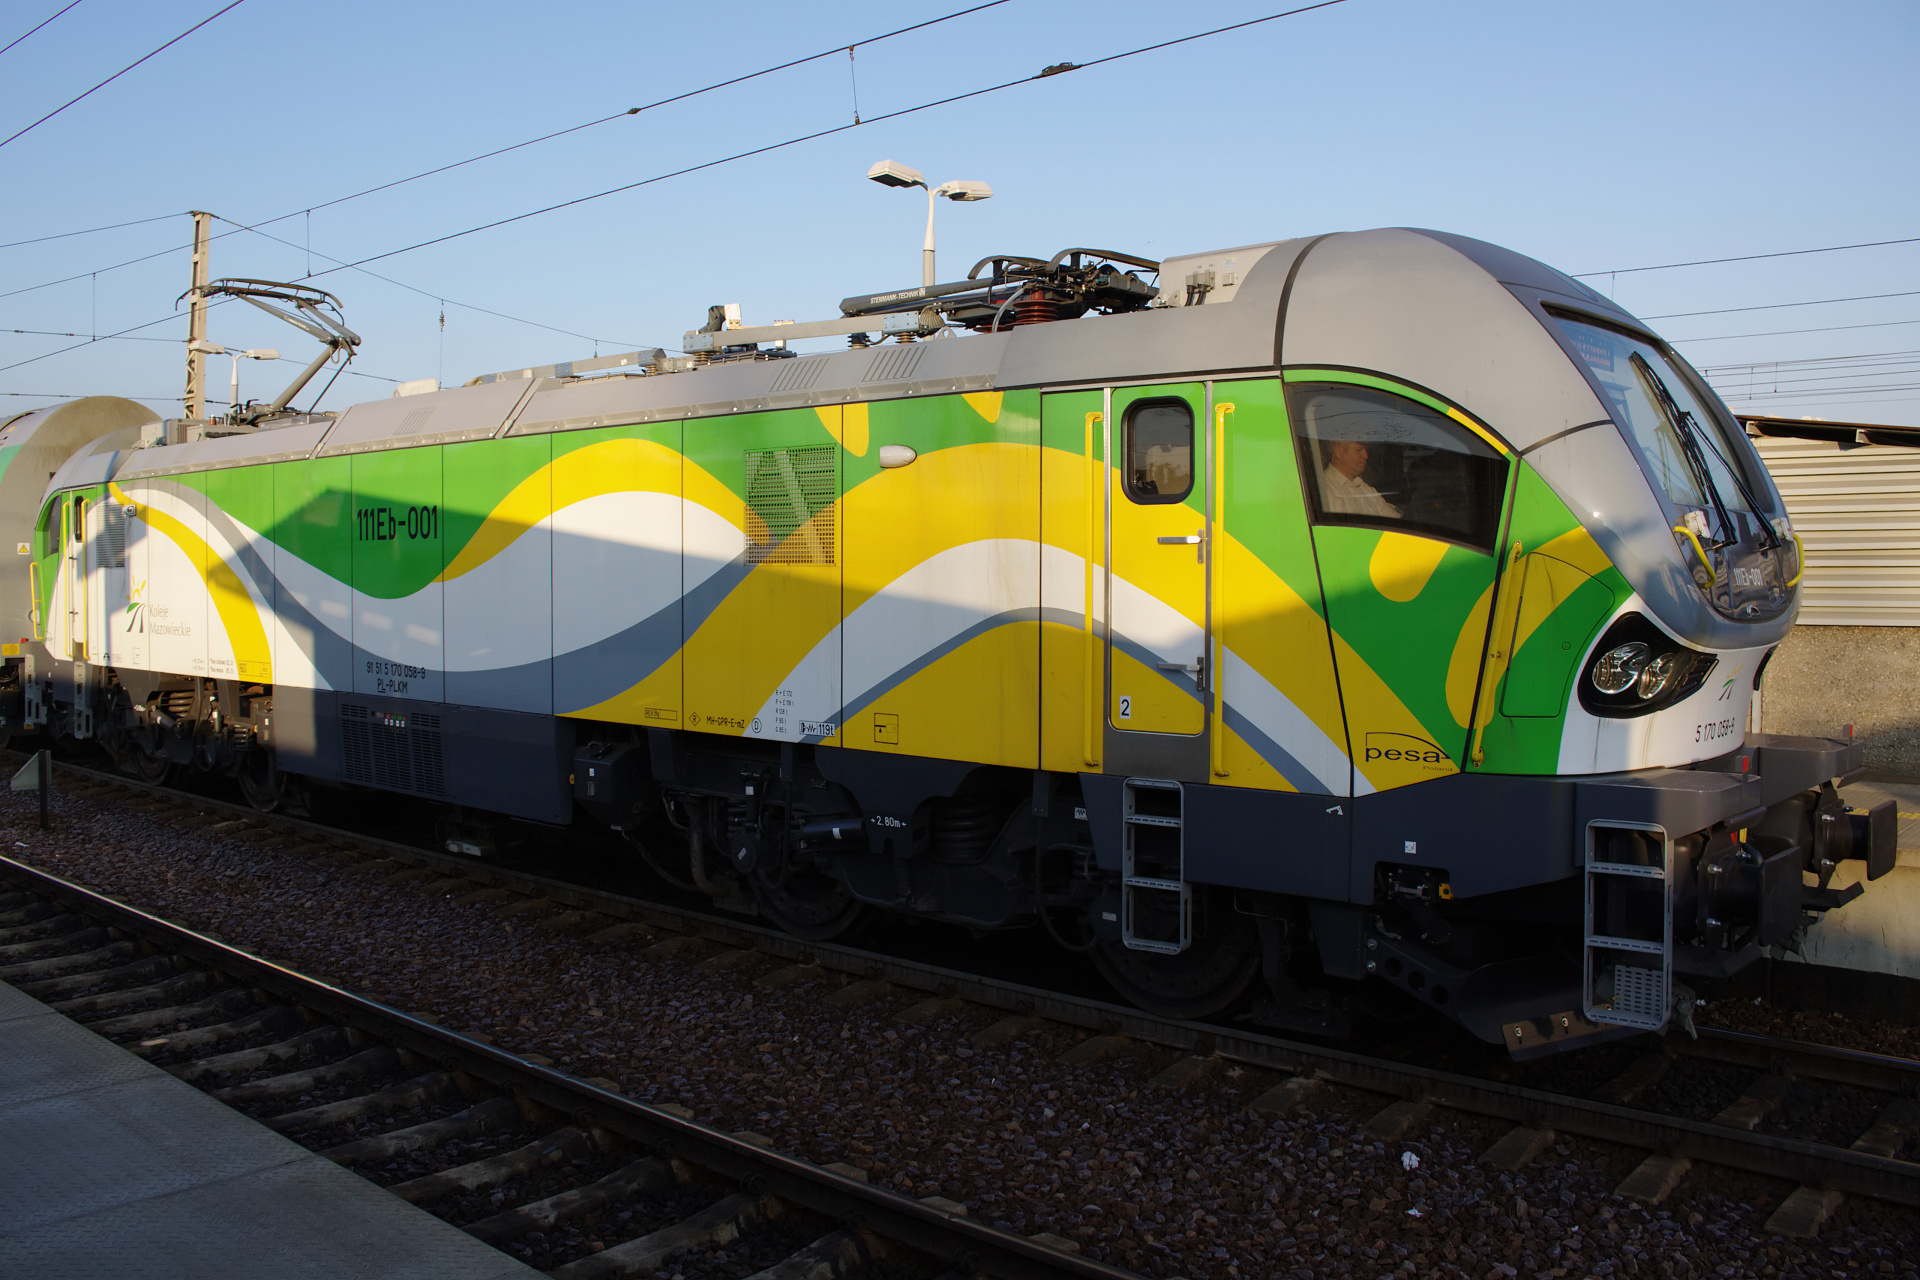 111Eb-001 (Vehicles » Trains and Locomotives » Pesa Gama)